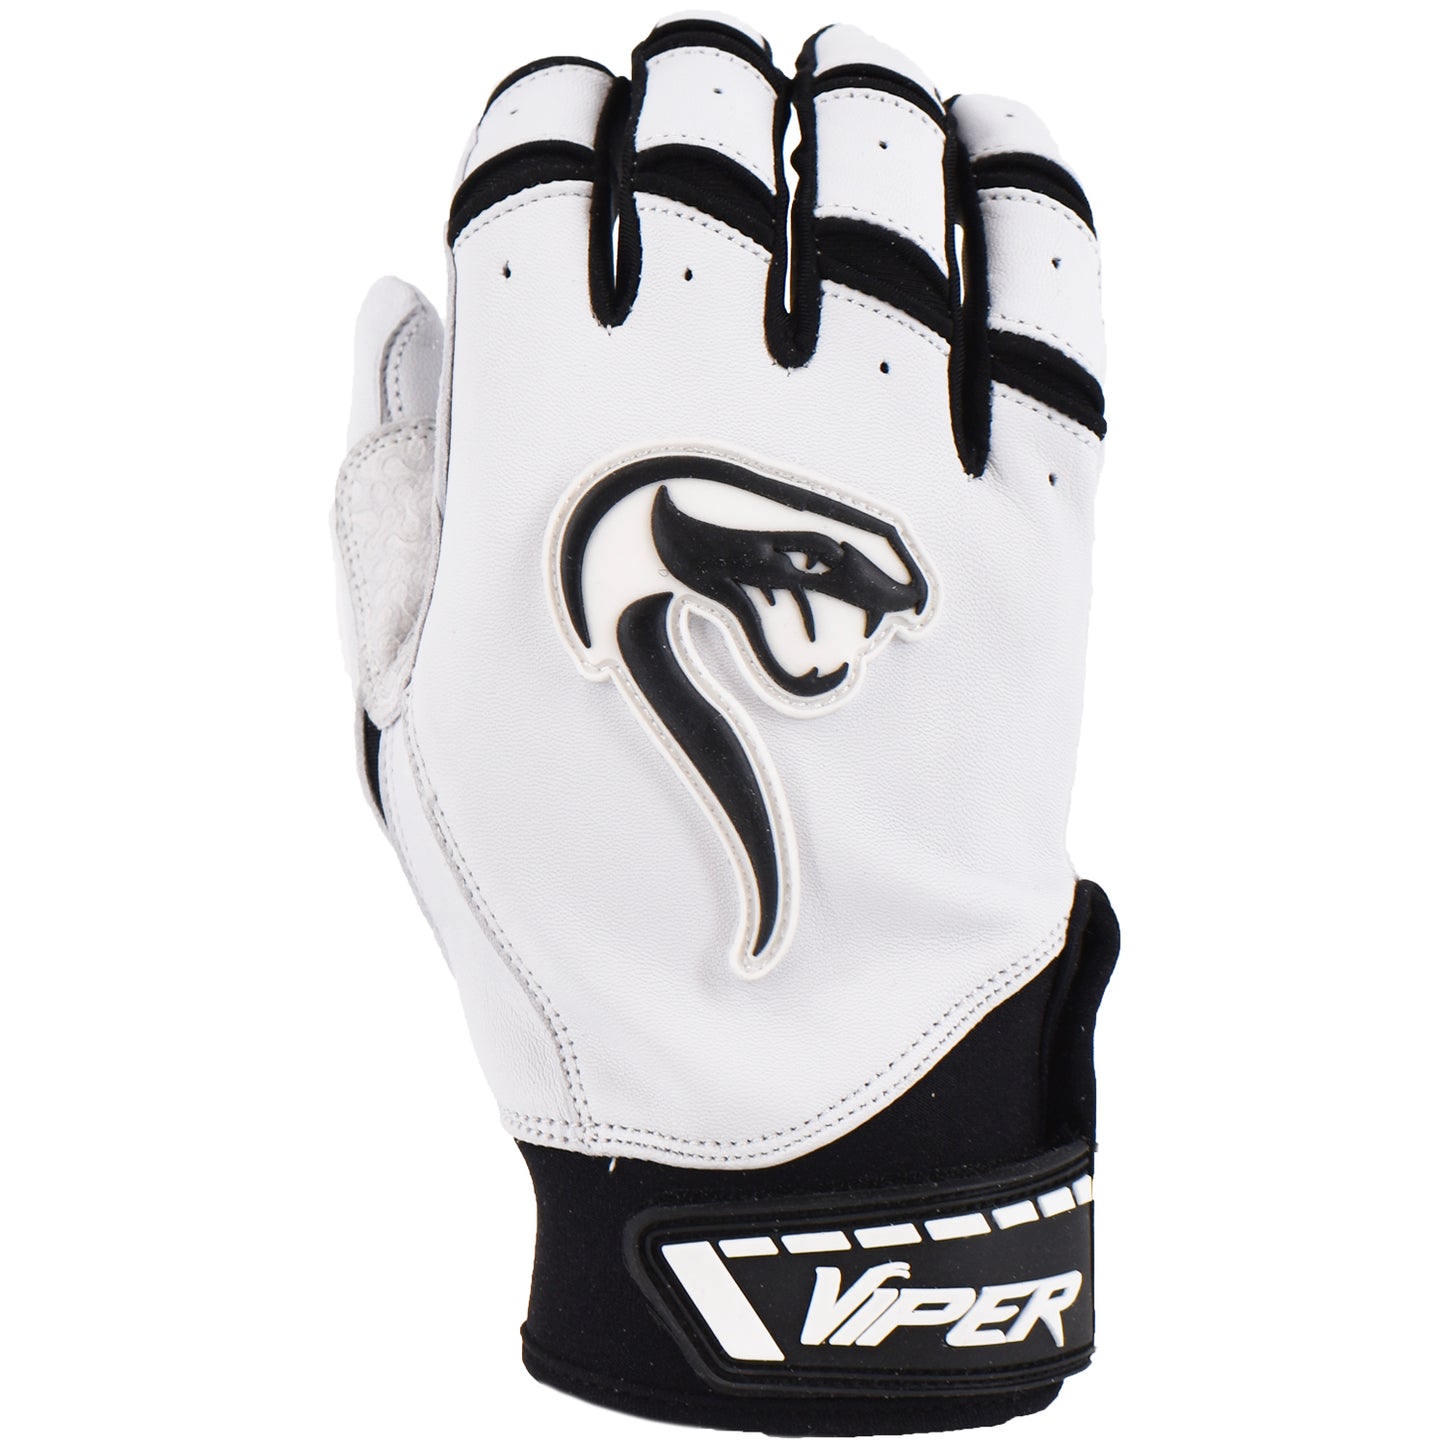 Viper Grindstone Short Cuff Batting Glove - White/Black